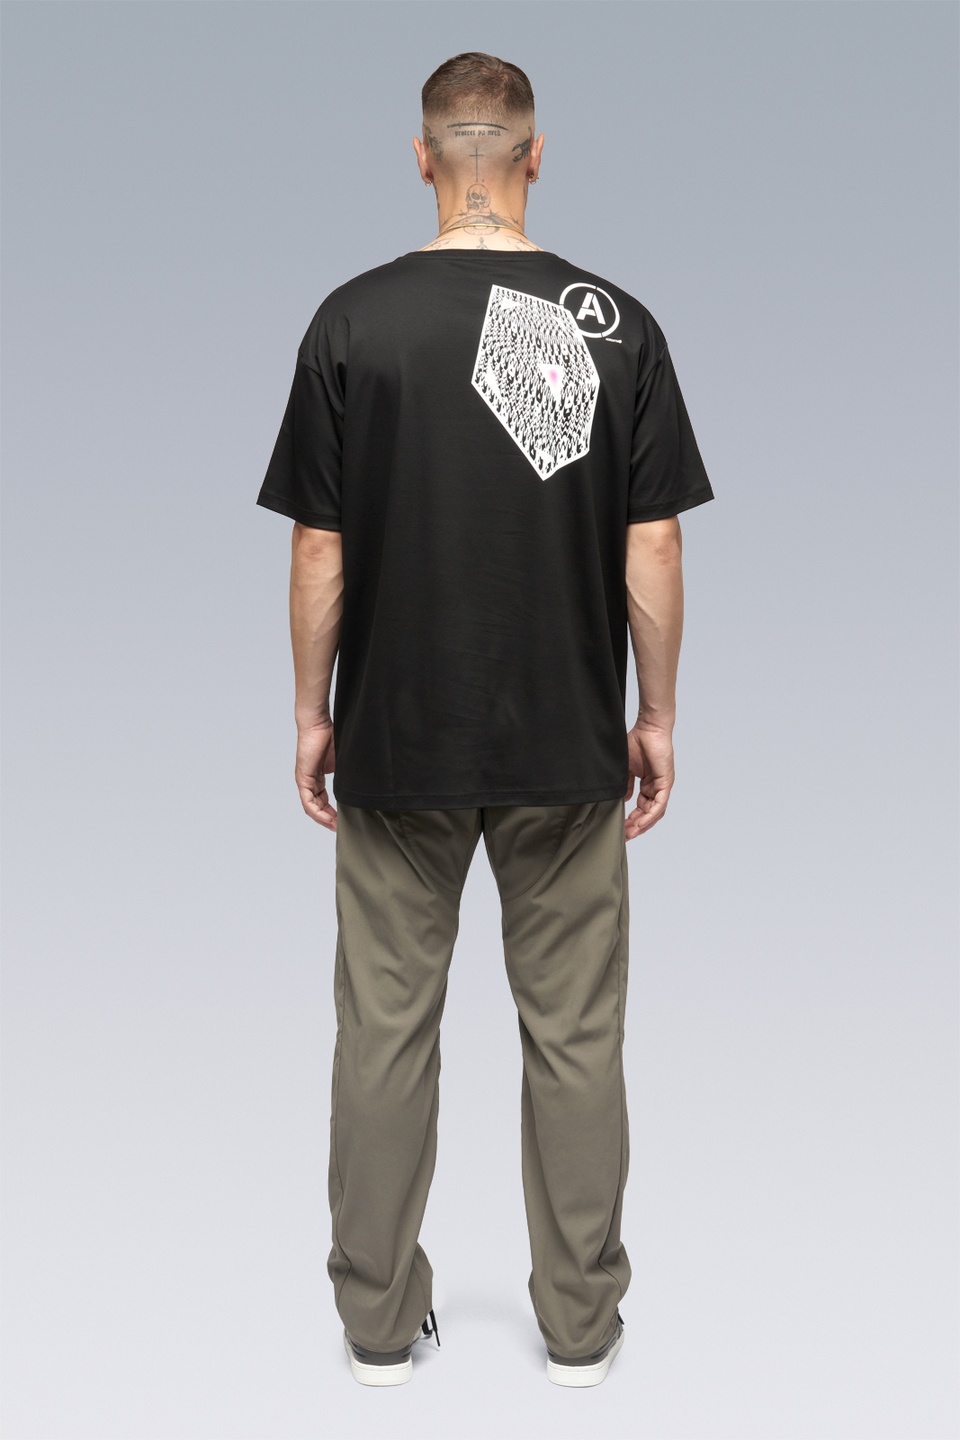 S24-PR-B 100% Cotton Mercerized Short Sleeve T-shirt Black - 3